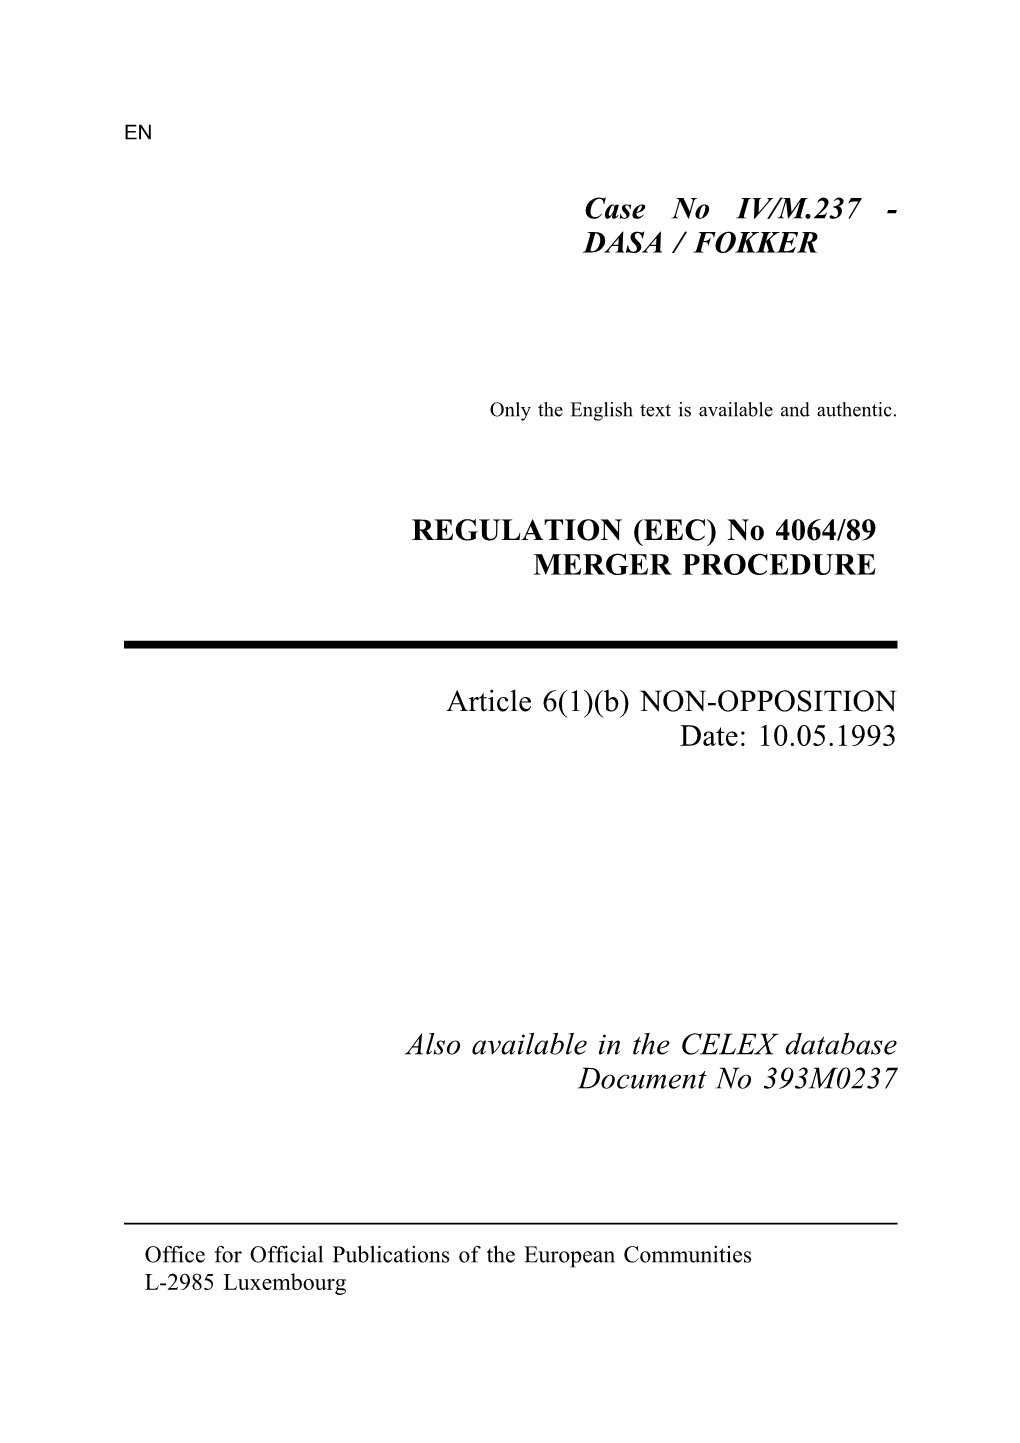 Merger Decision IV/M.237 of 10.05.1993